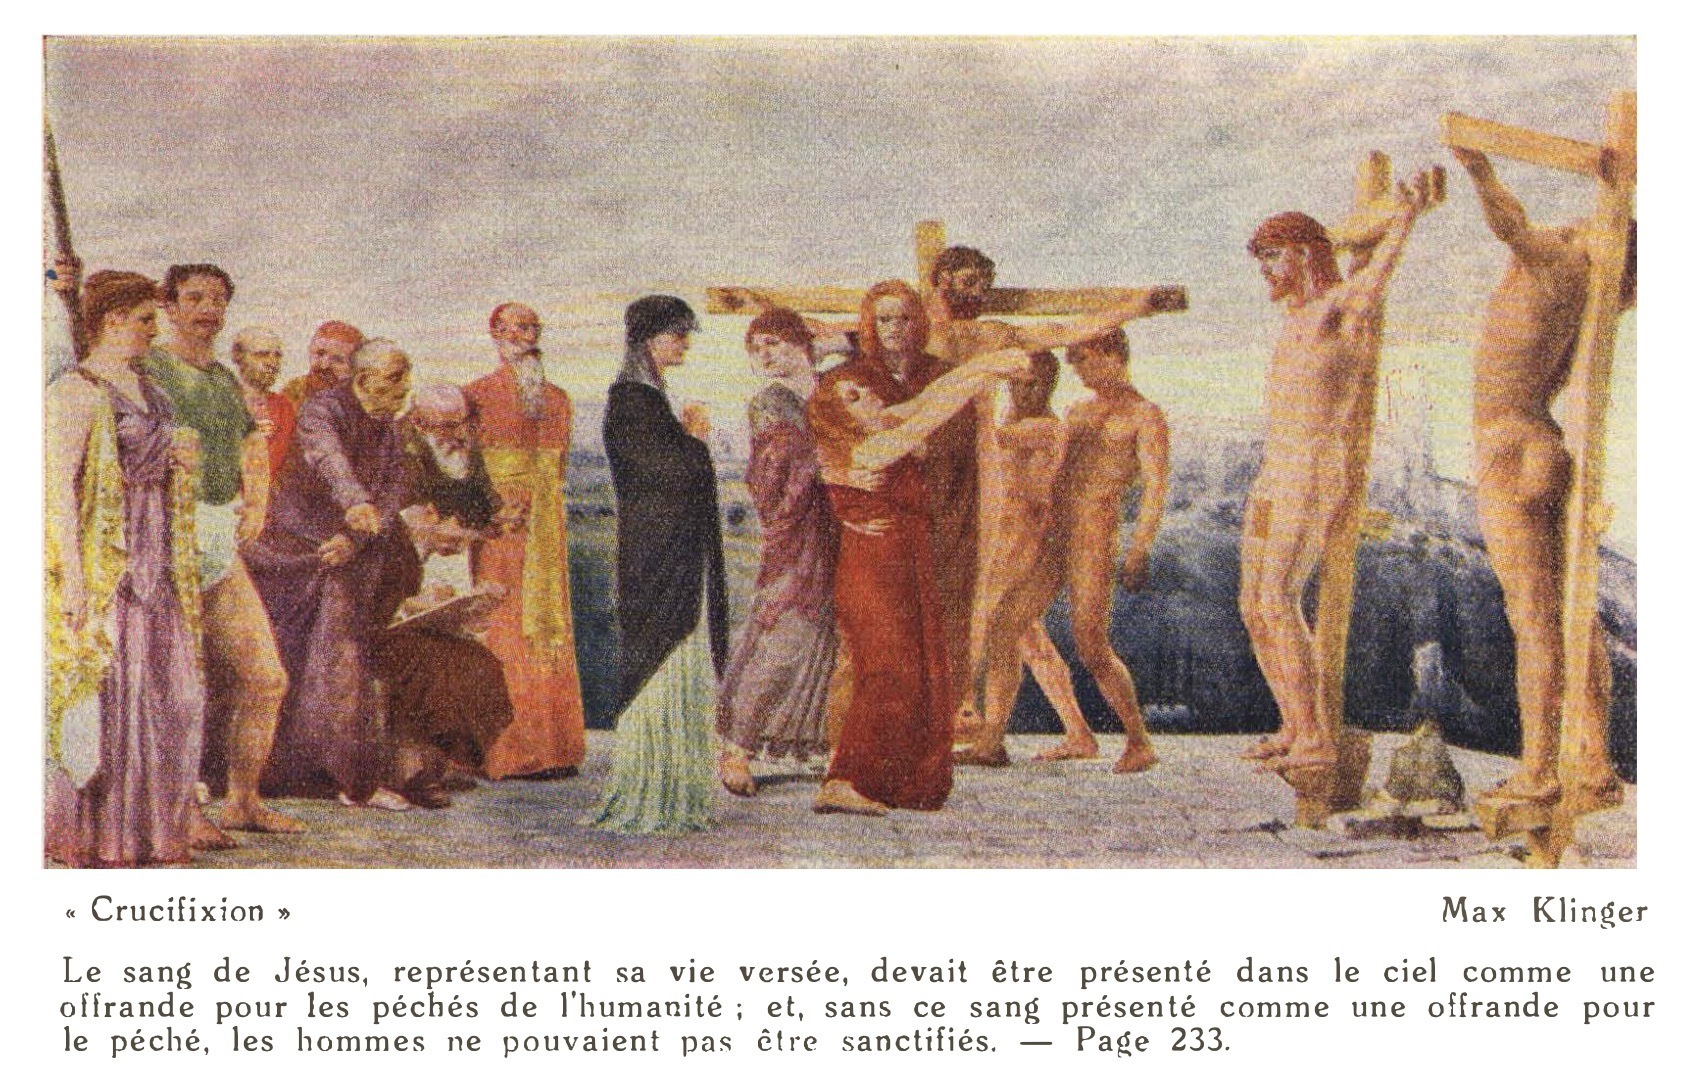 La villa Beth Sarim et son "poteau de supplice" du satyre Marsya où Rutherford y faisaient ses orgies sexuelles. 37pv